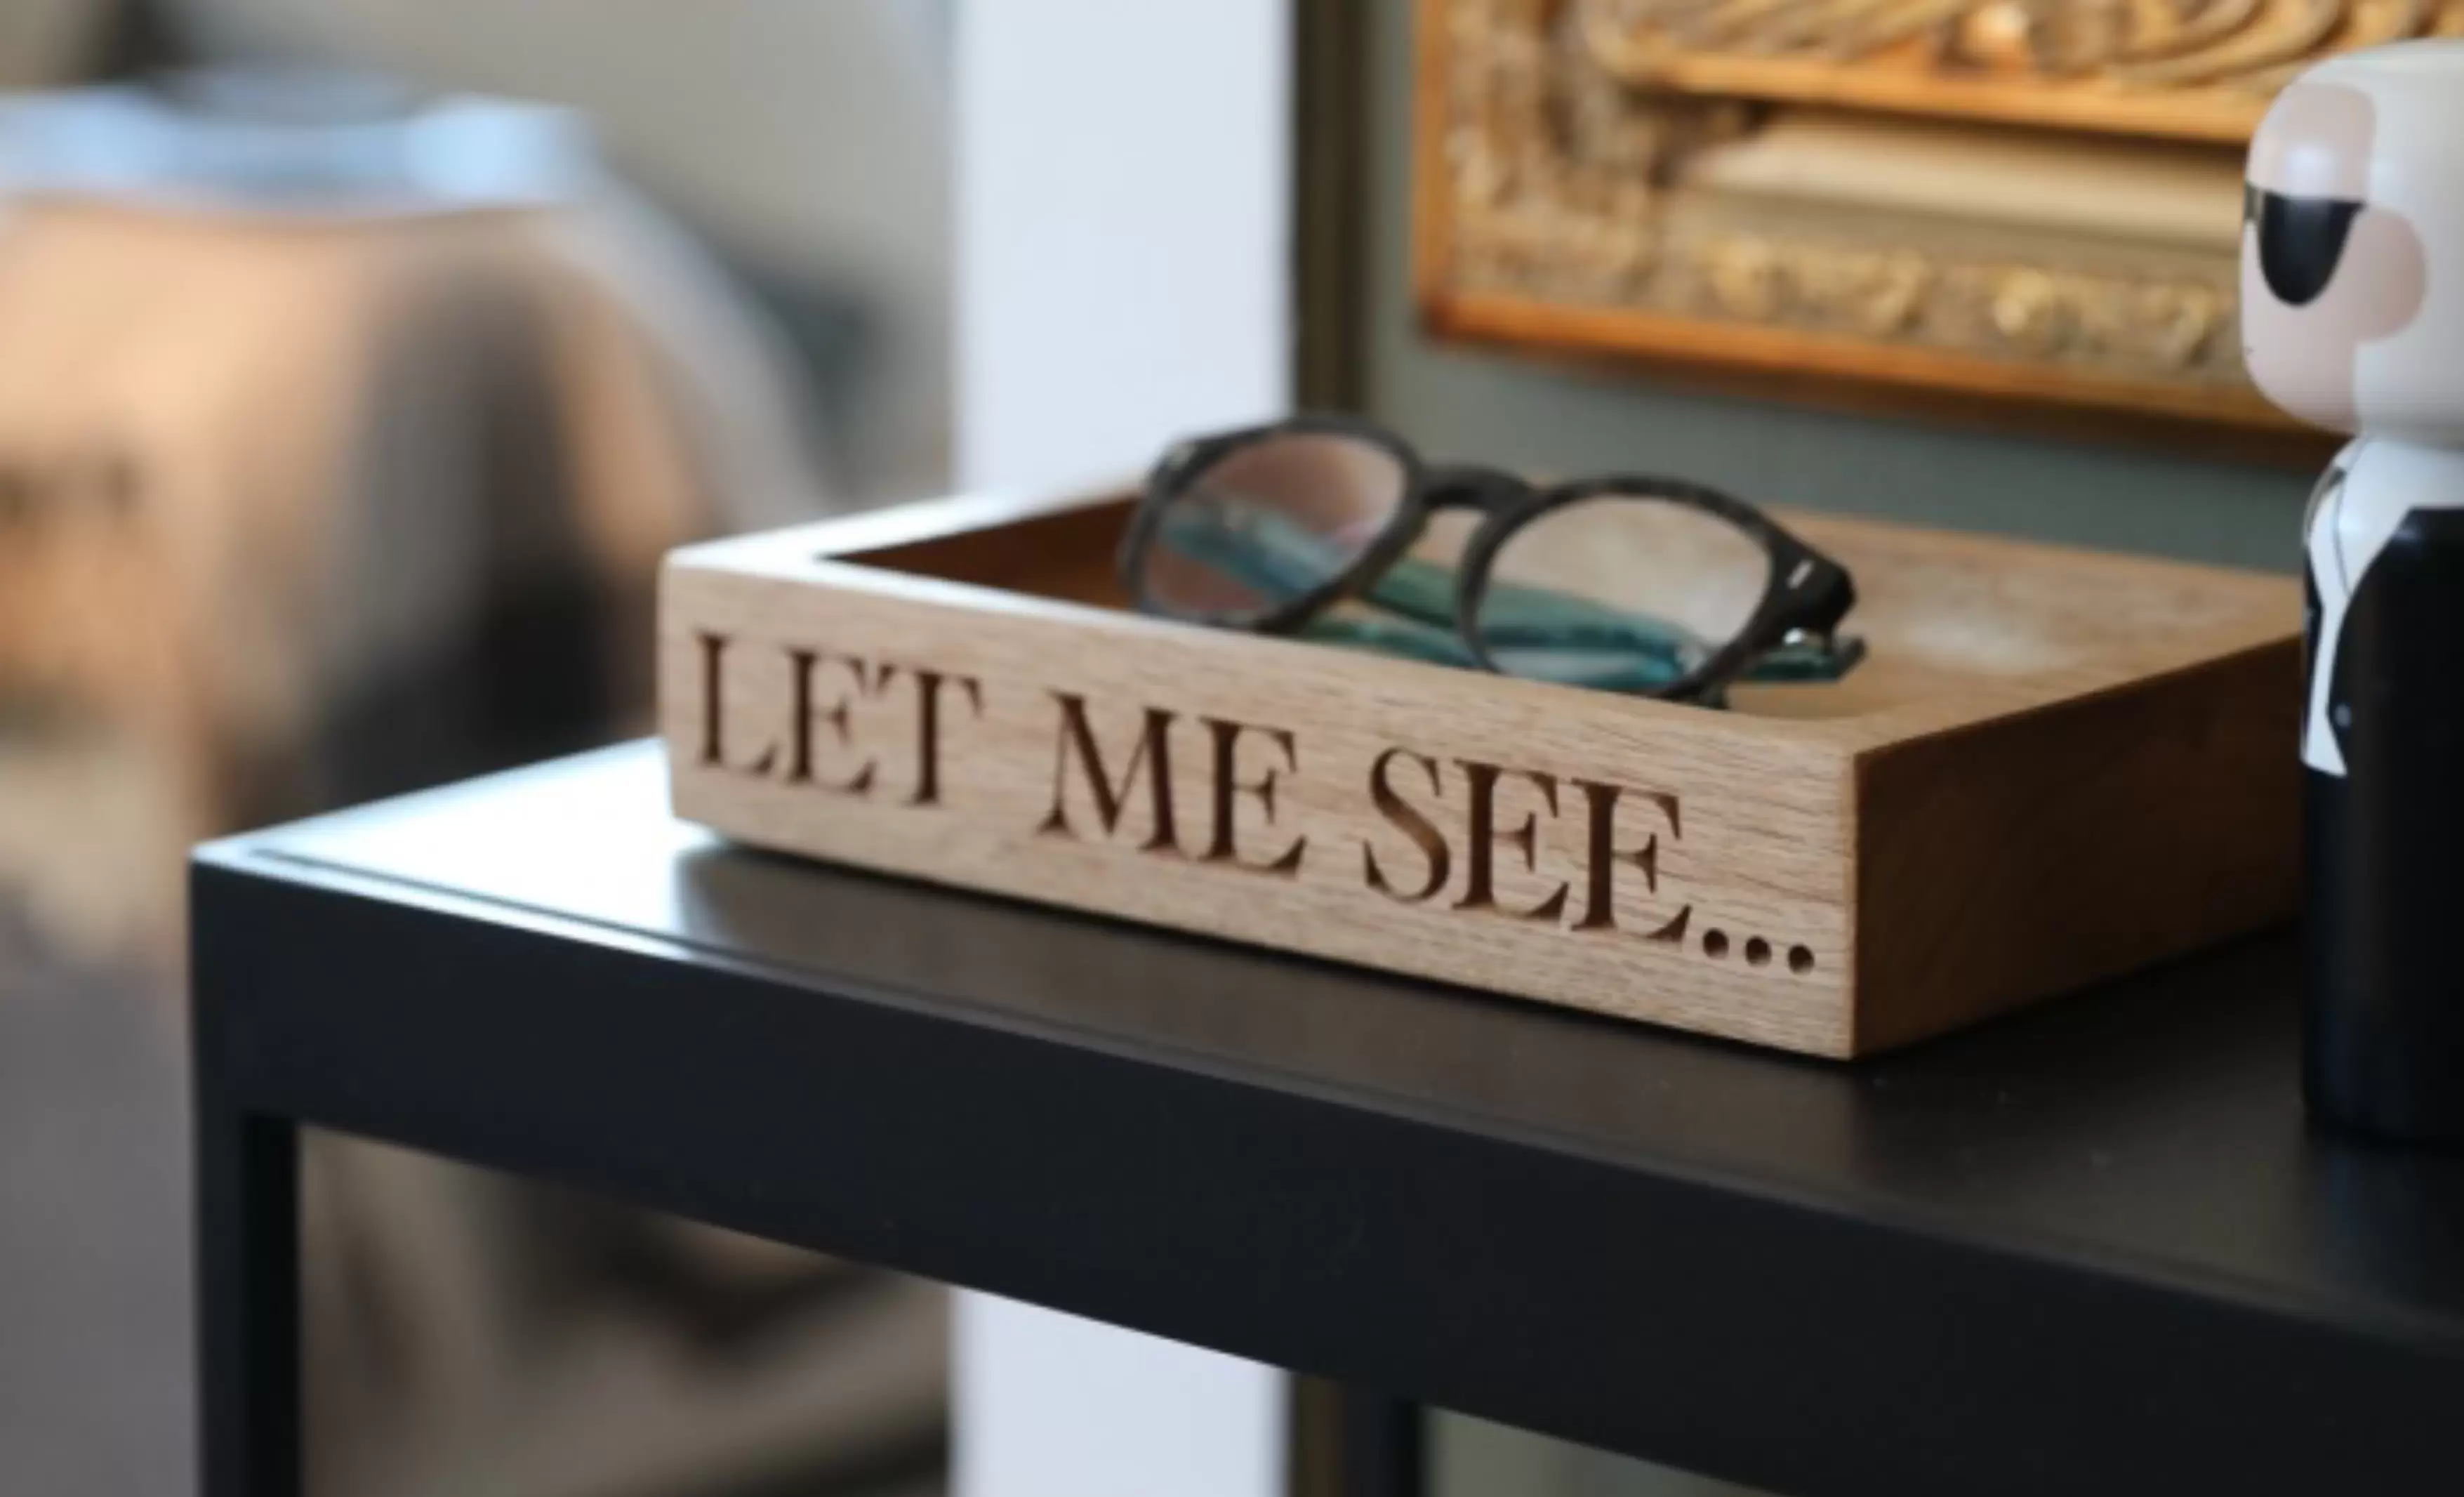 'Let me see' glasses holder from Oak & Rope